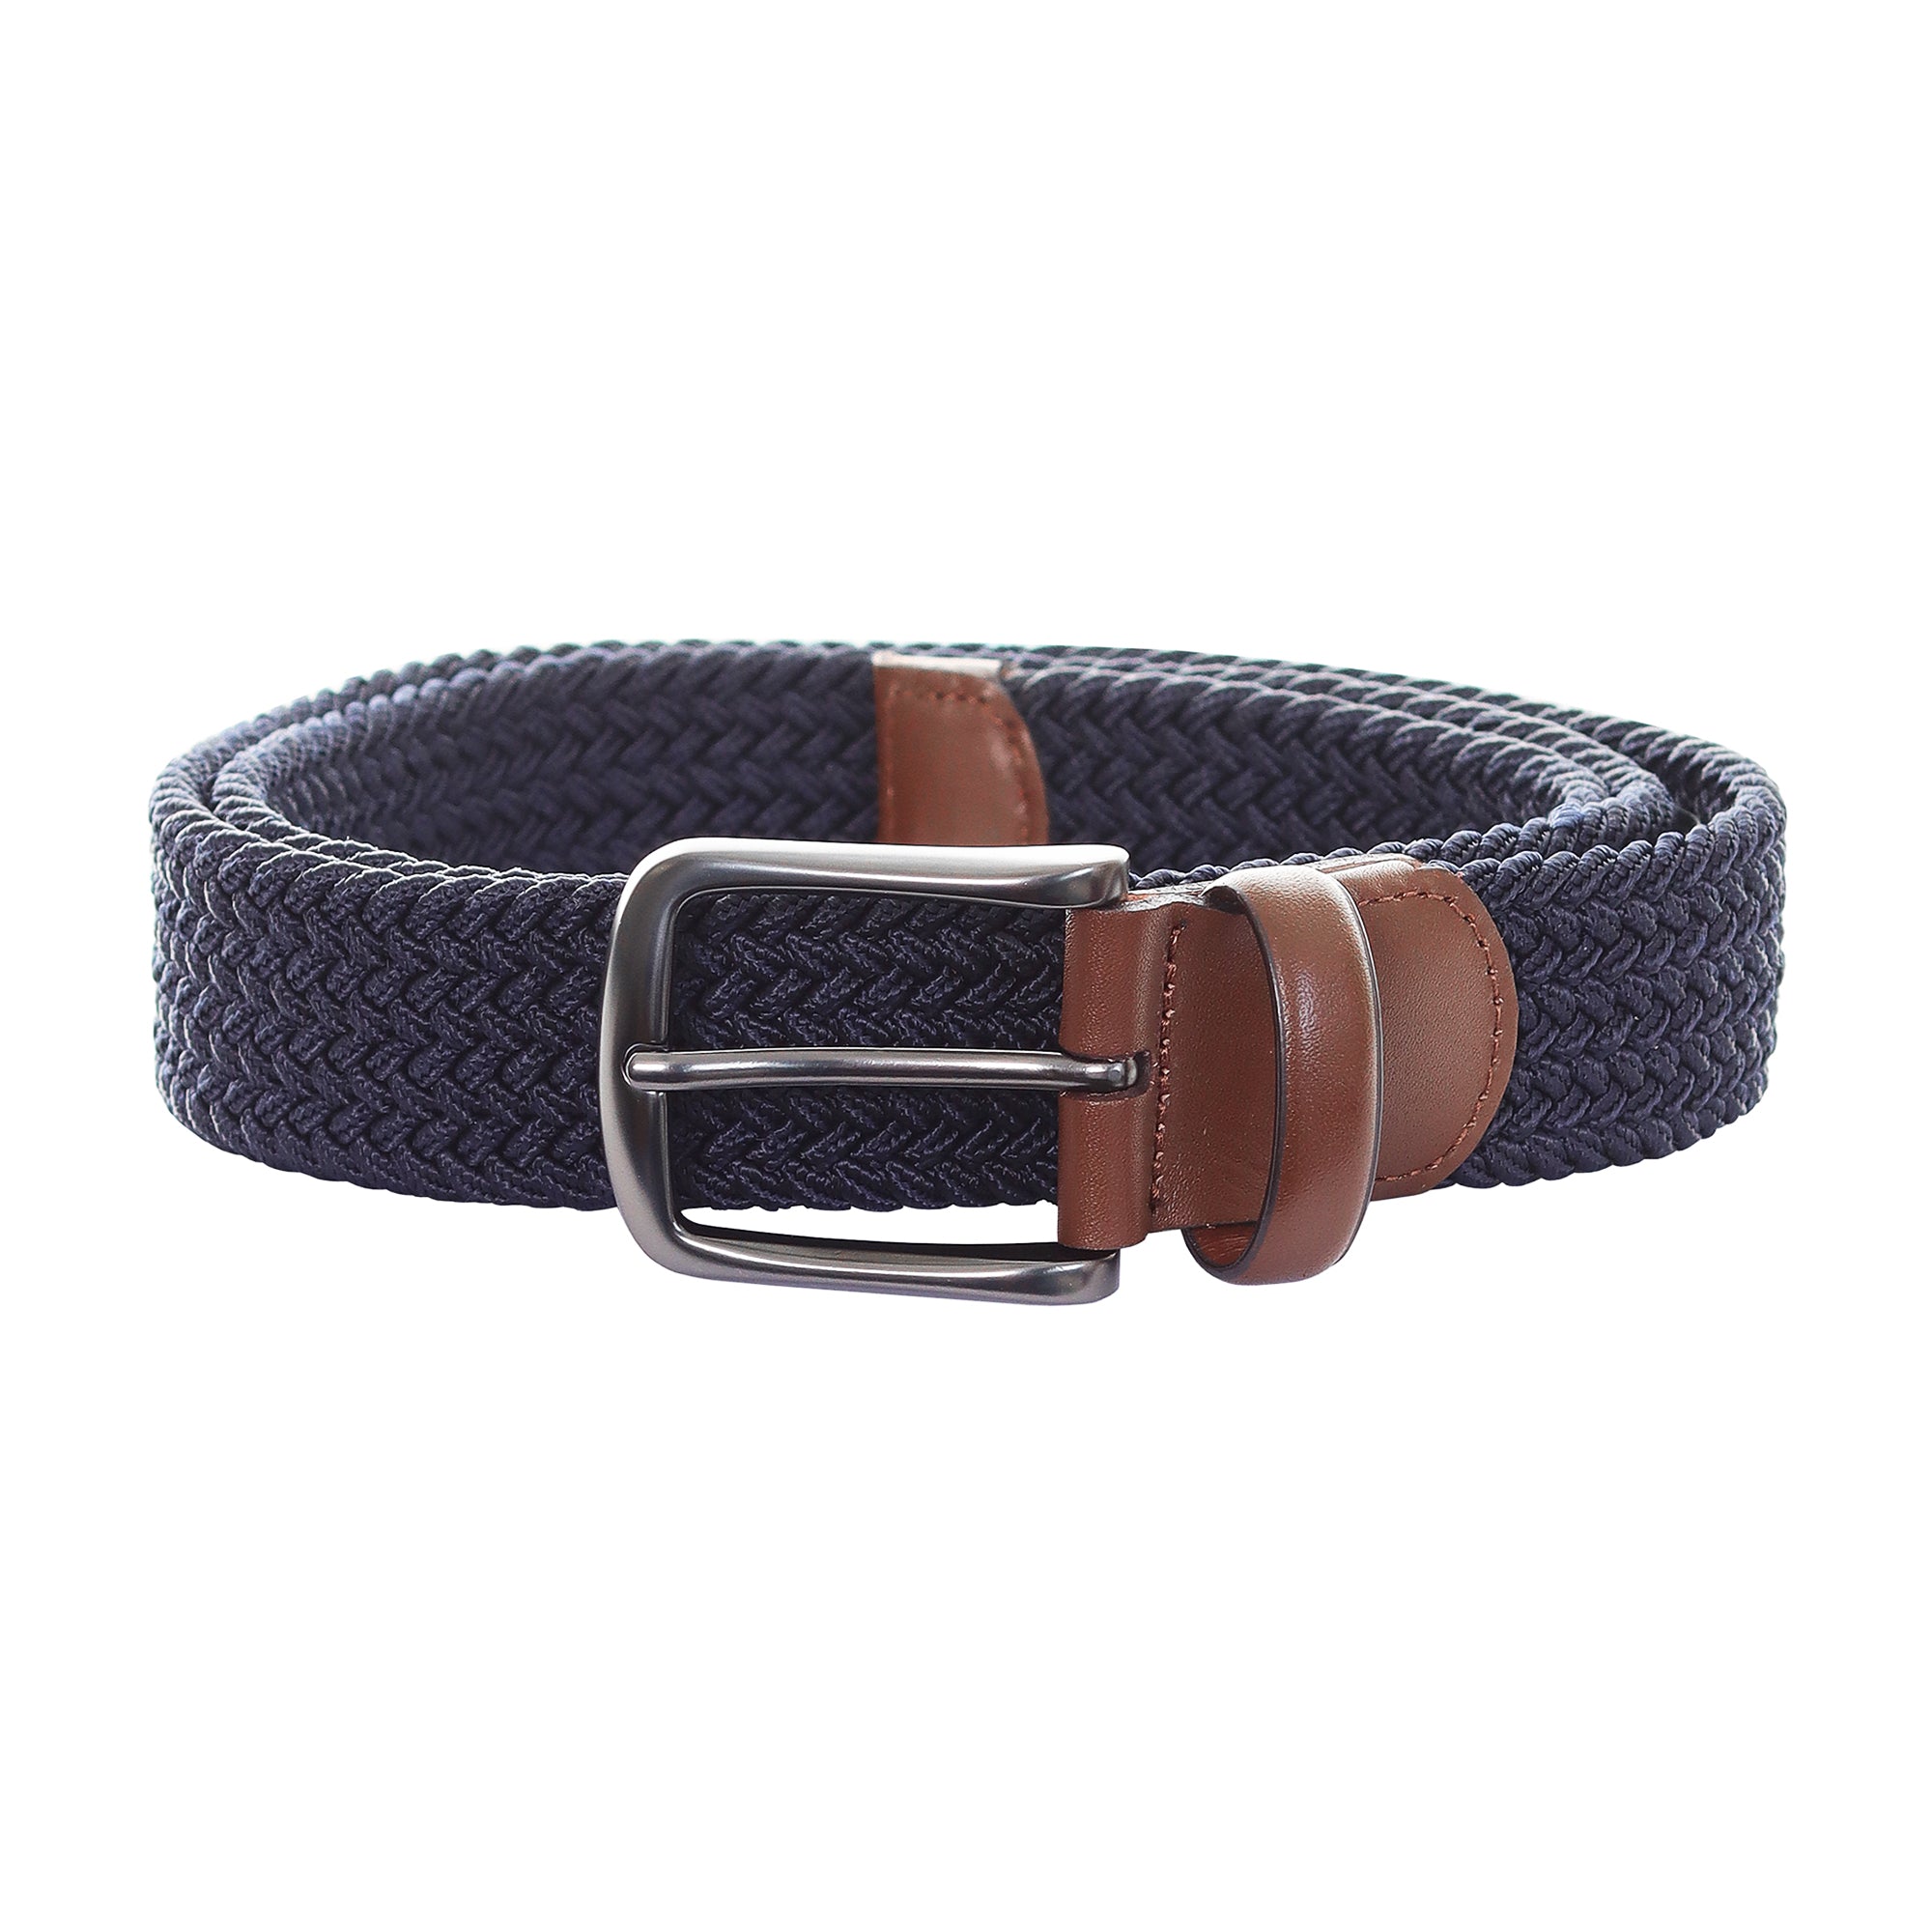 original-penguin-golf-solid-braided-belt-pn86102g-410-navy